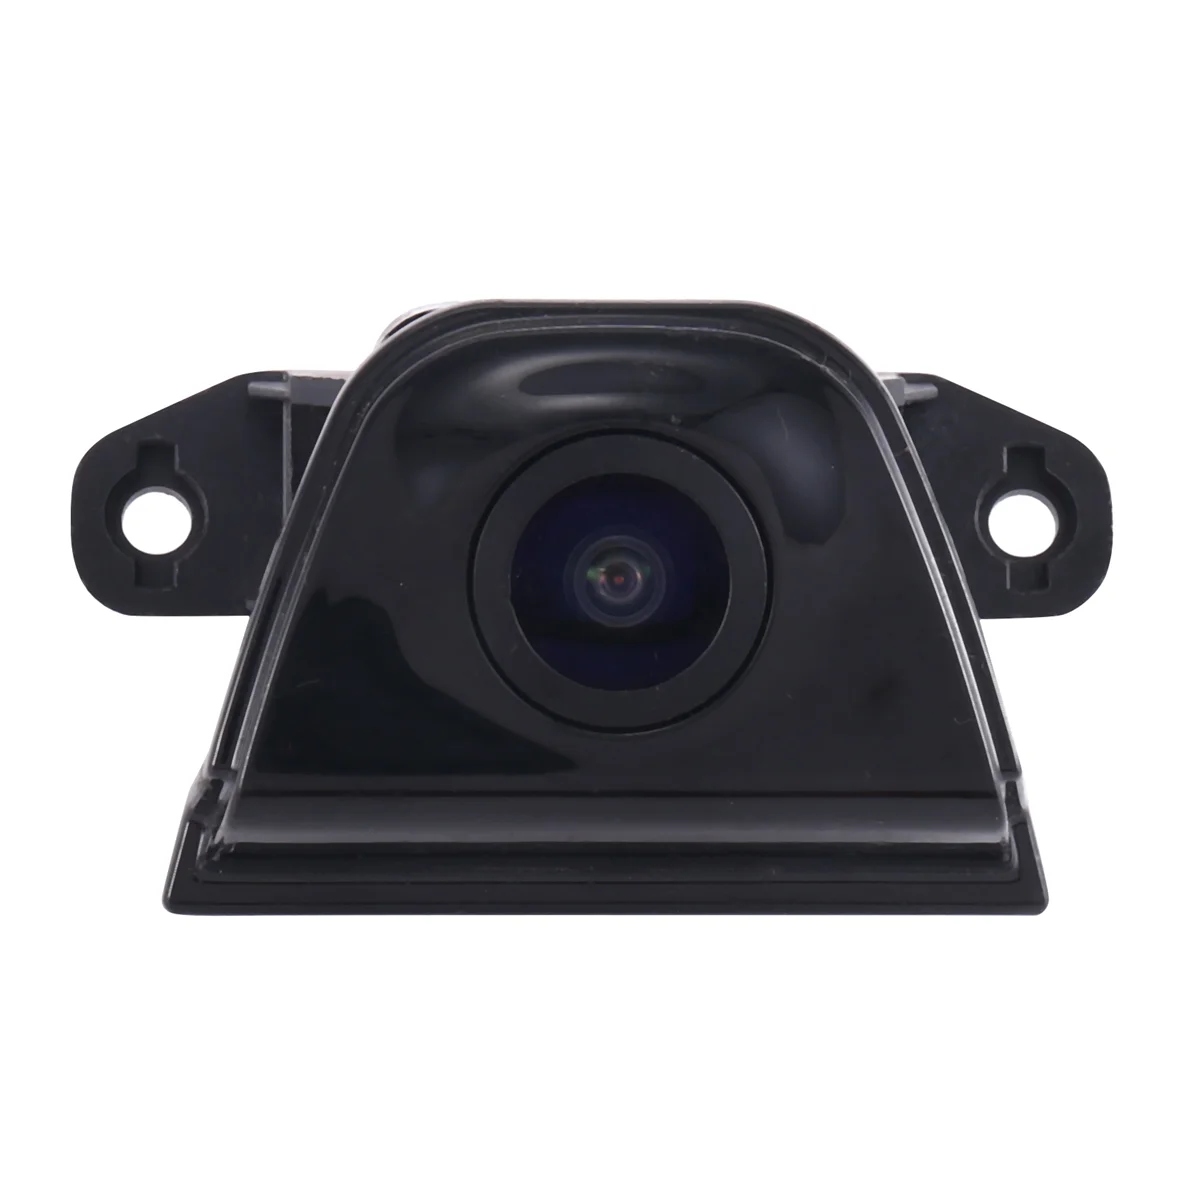 

99240-F6000 New Rear View Camera Reverse Camera Parking Assist Backup Camera for Cadenza 2020-2021